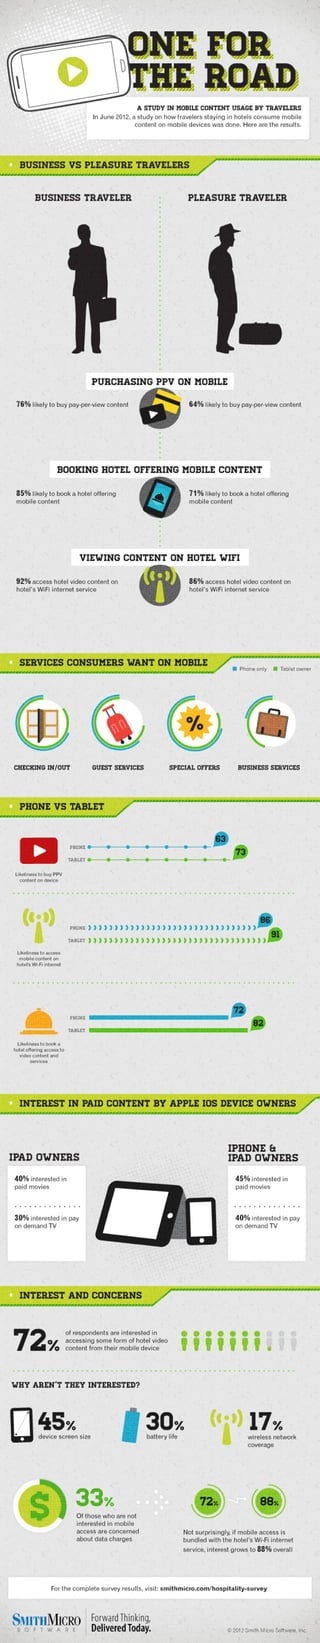 Hospitality Survey 2012 Infographic